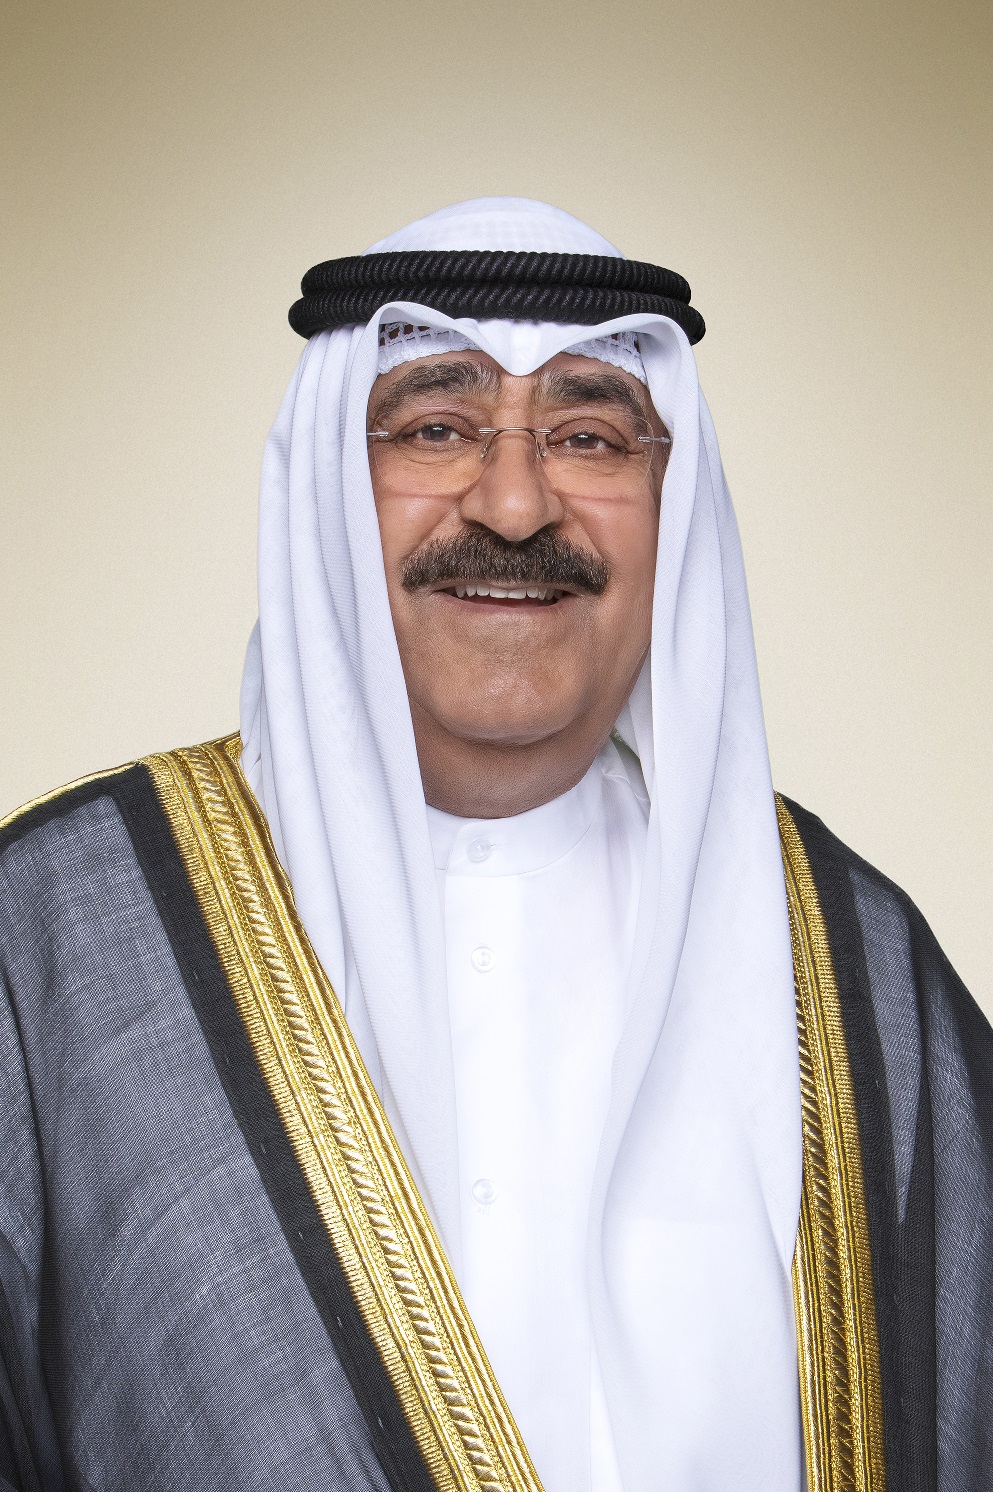 His Highness the Crown Prince Sheikh Mishal Ahmad Al-Jaber Al-Sabah